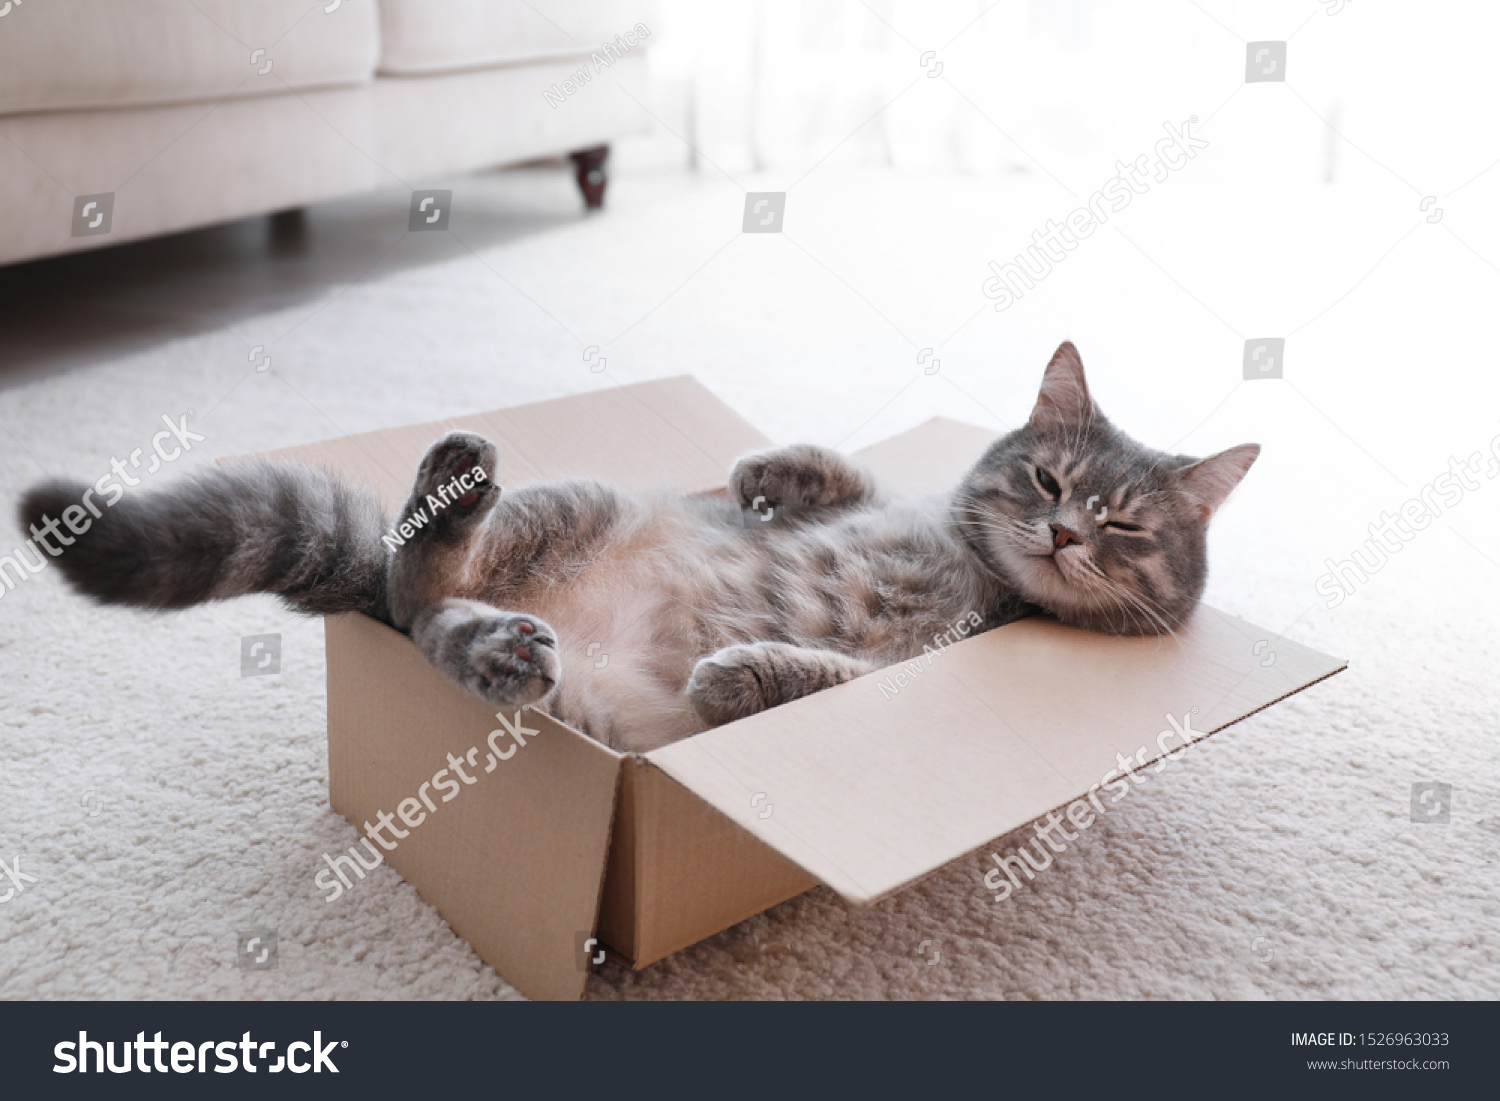 Cute grey tabby cat in cardboard box on floor at home #1526963033